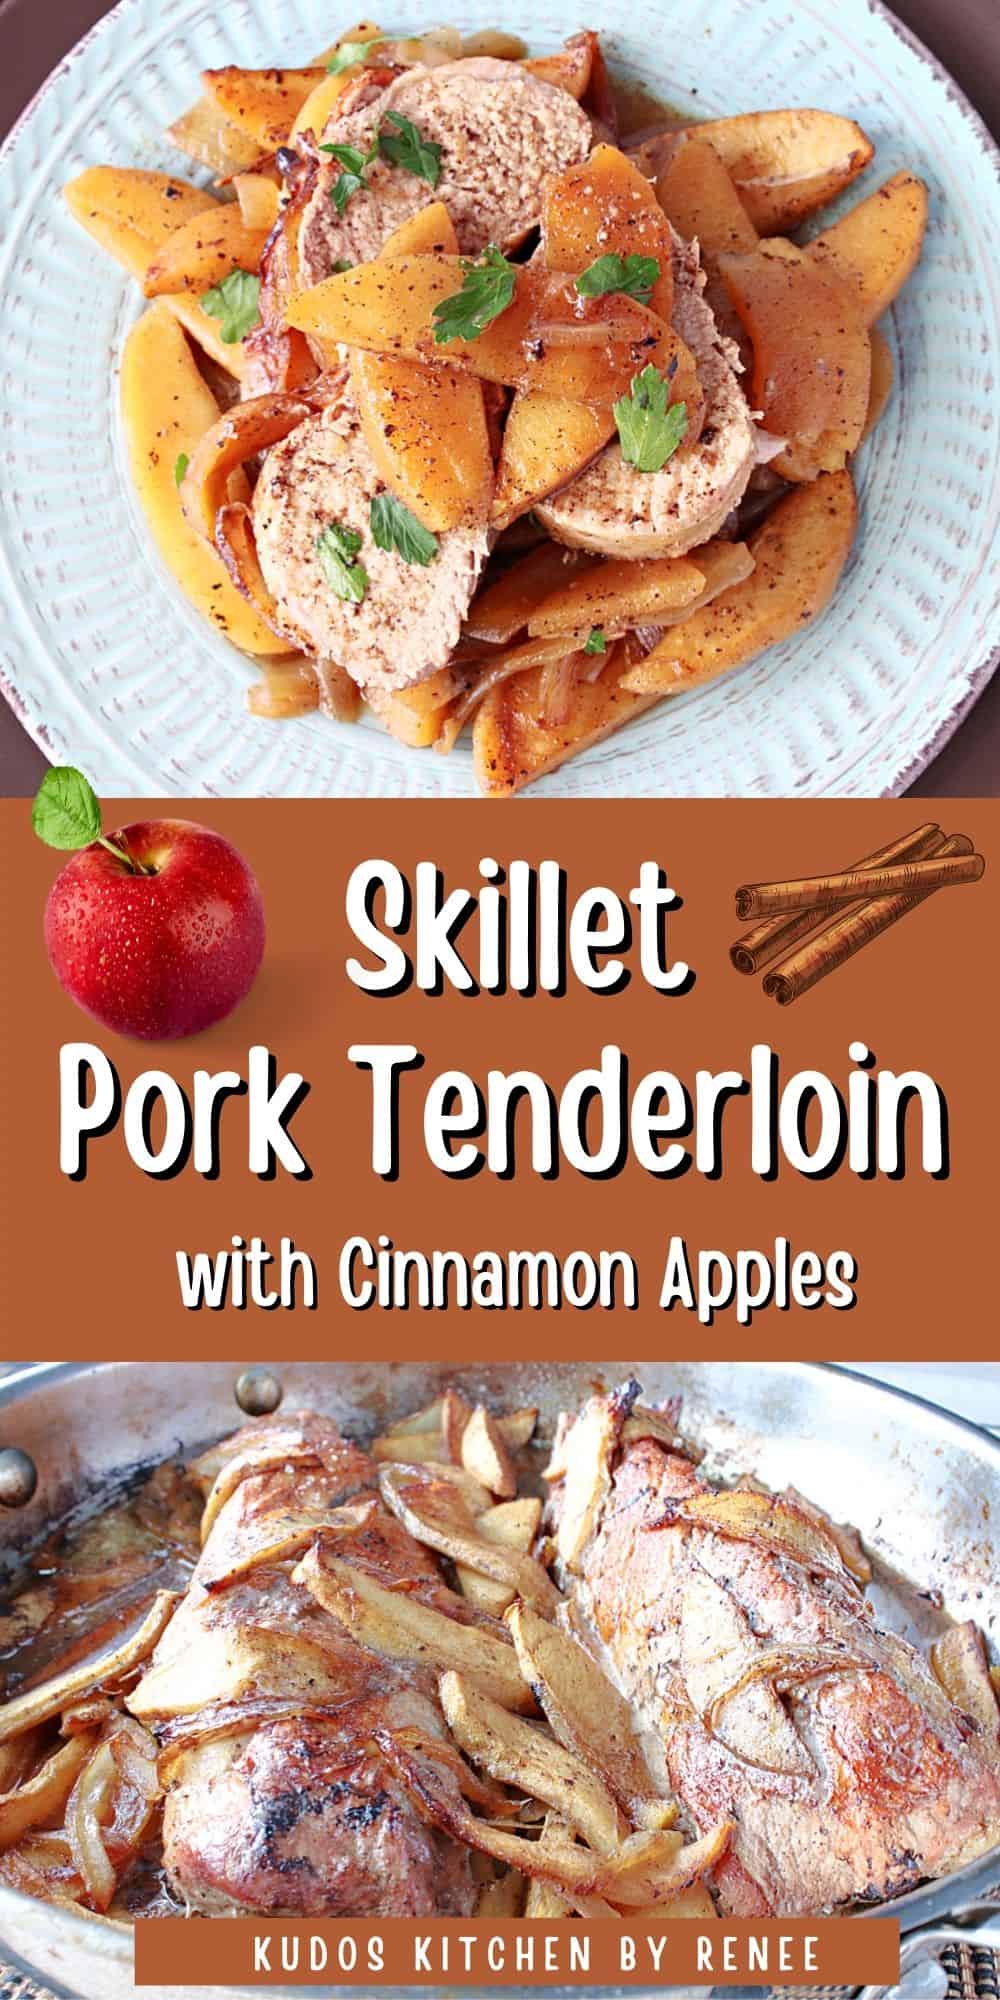 Skillet Pork Tenderloin with Cinnamon Apples - Kudos Kitchen by Renee